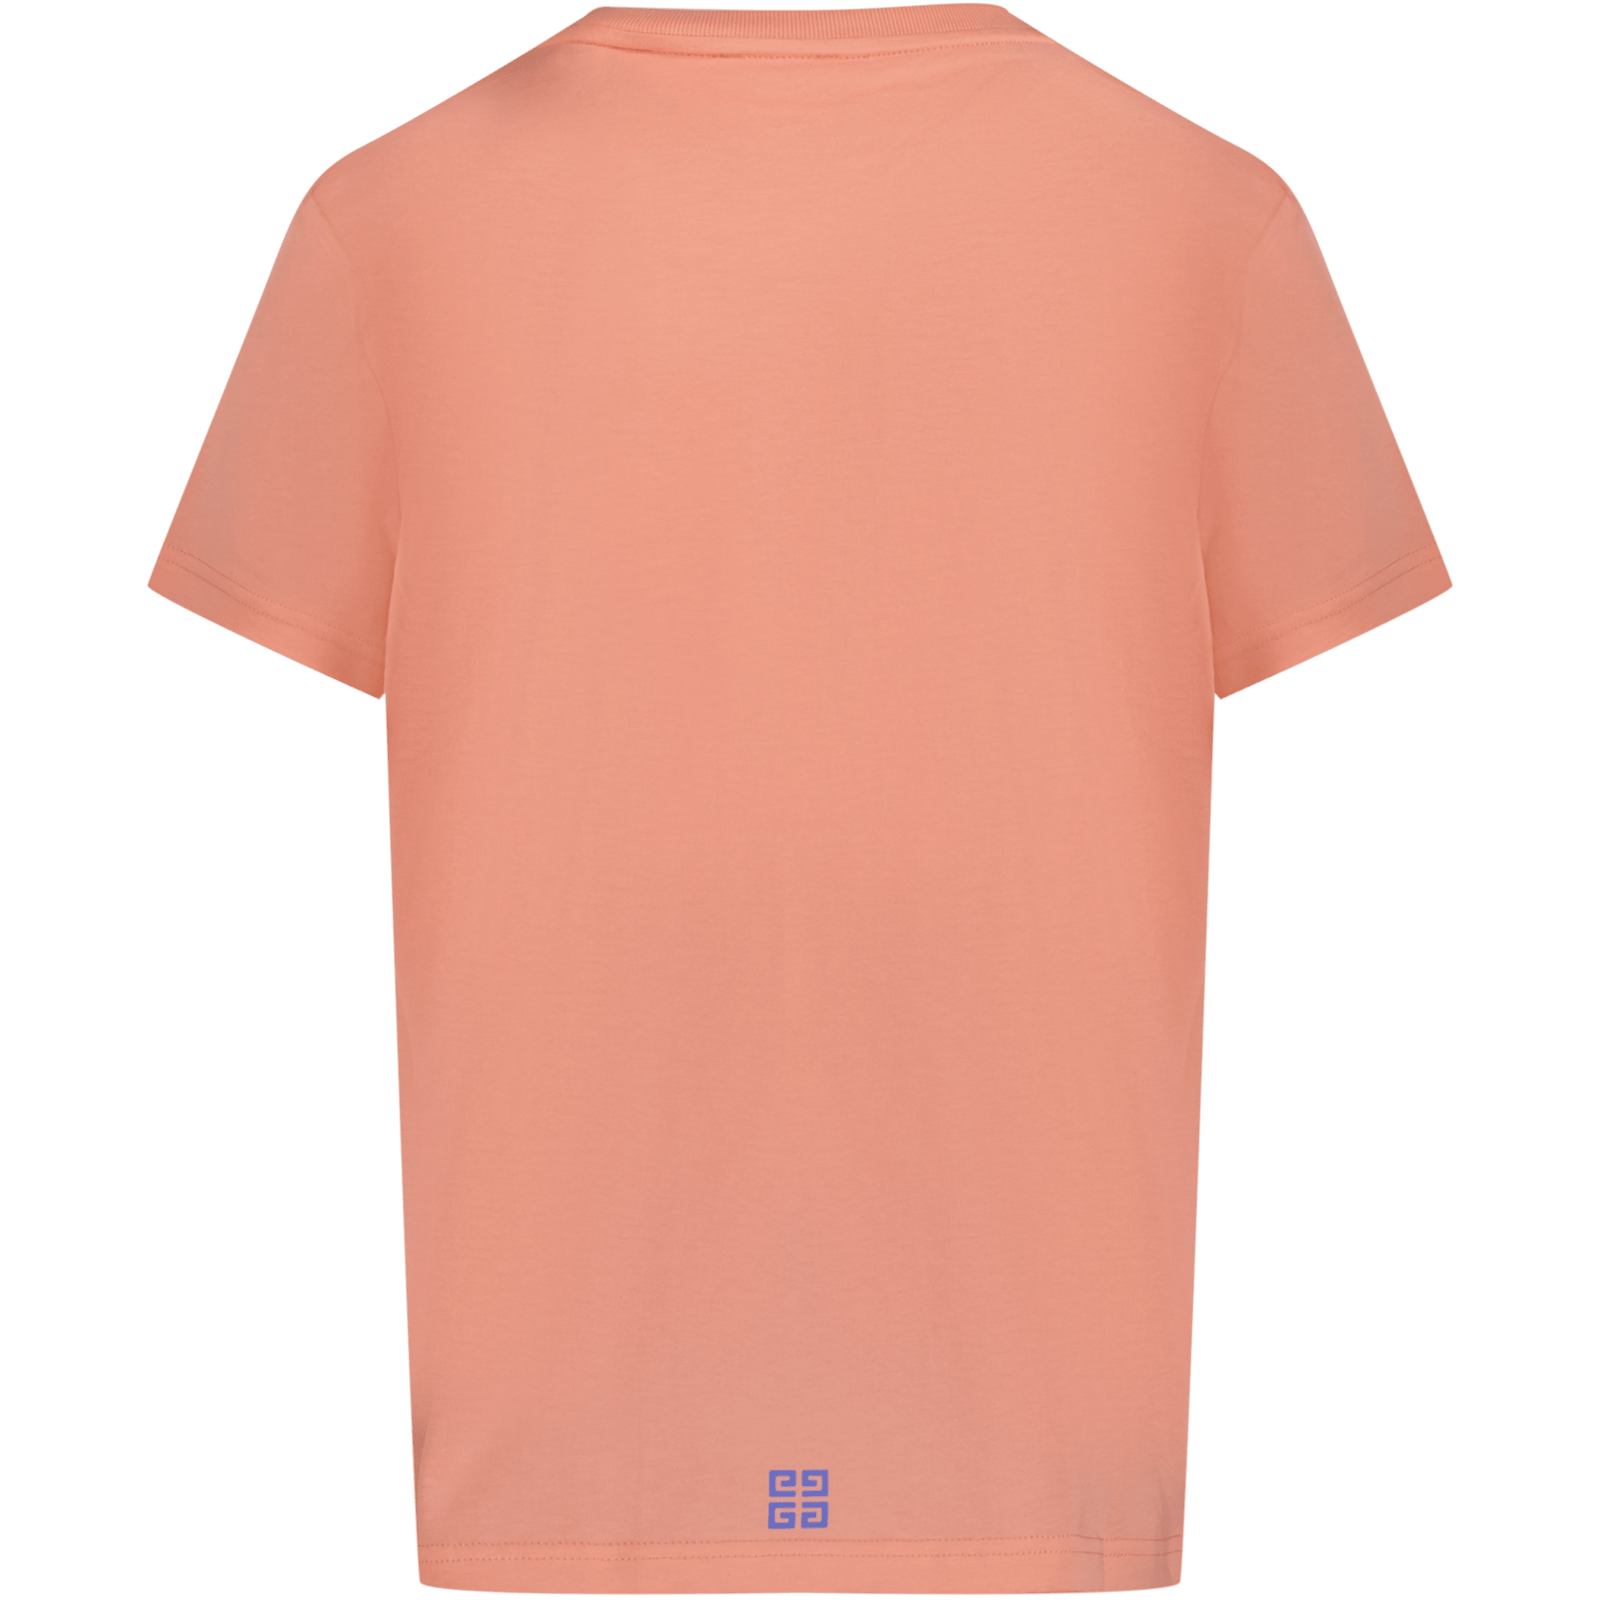 Givenchy Kinder Jongens T-Shirt Peach 4Y